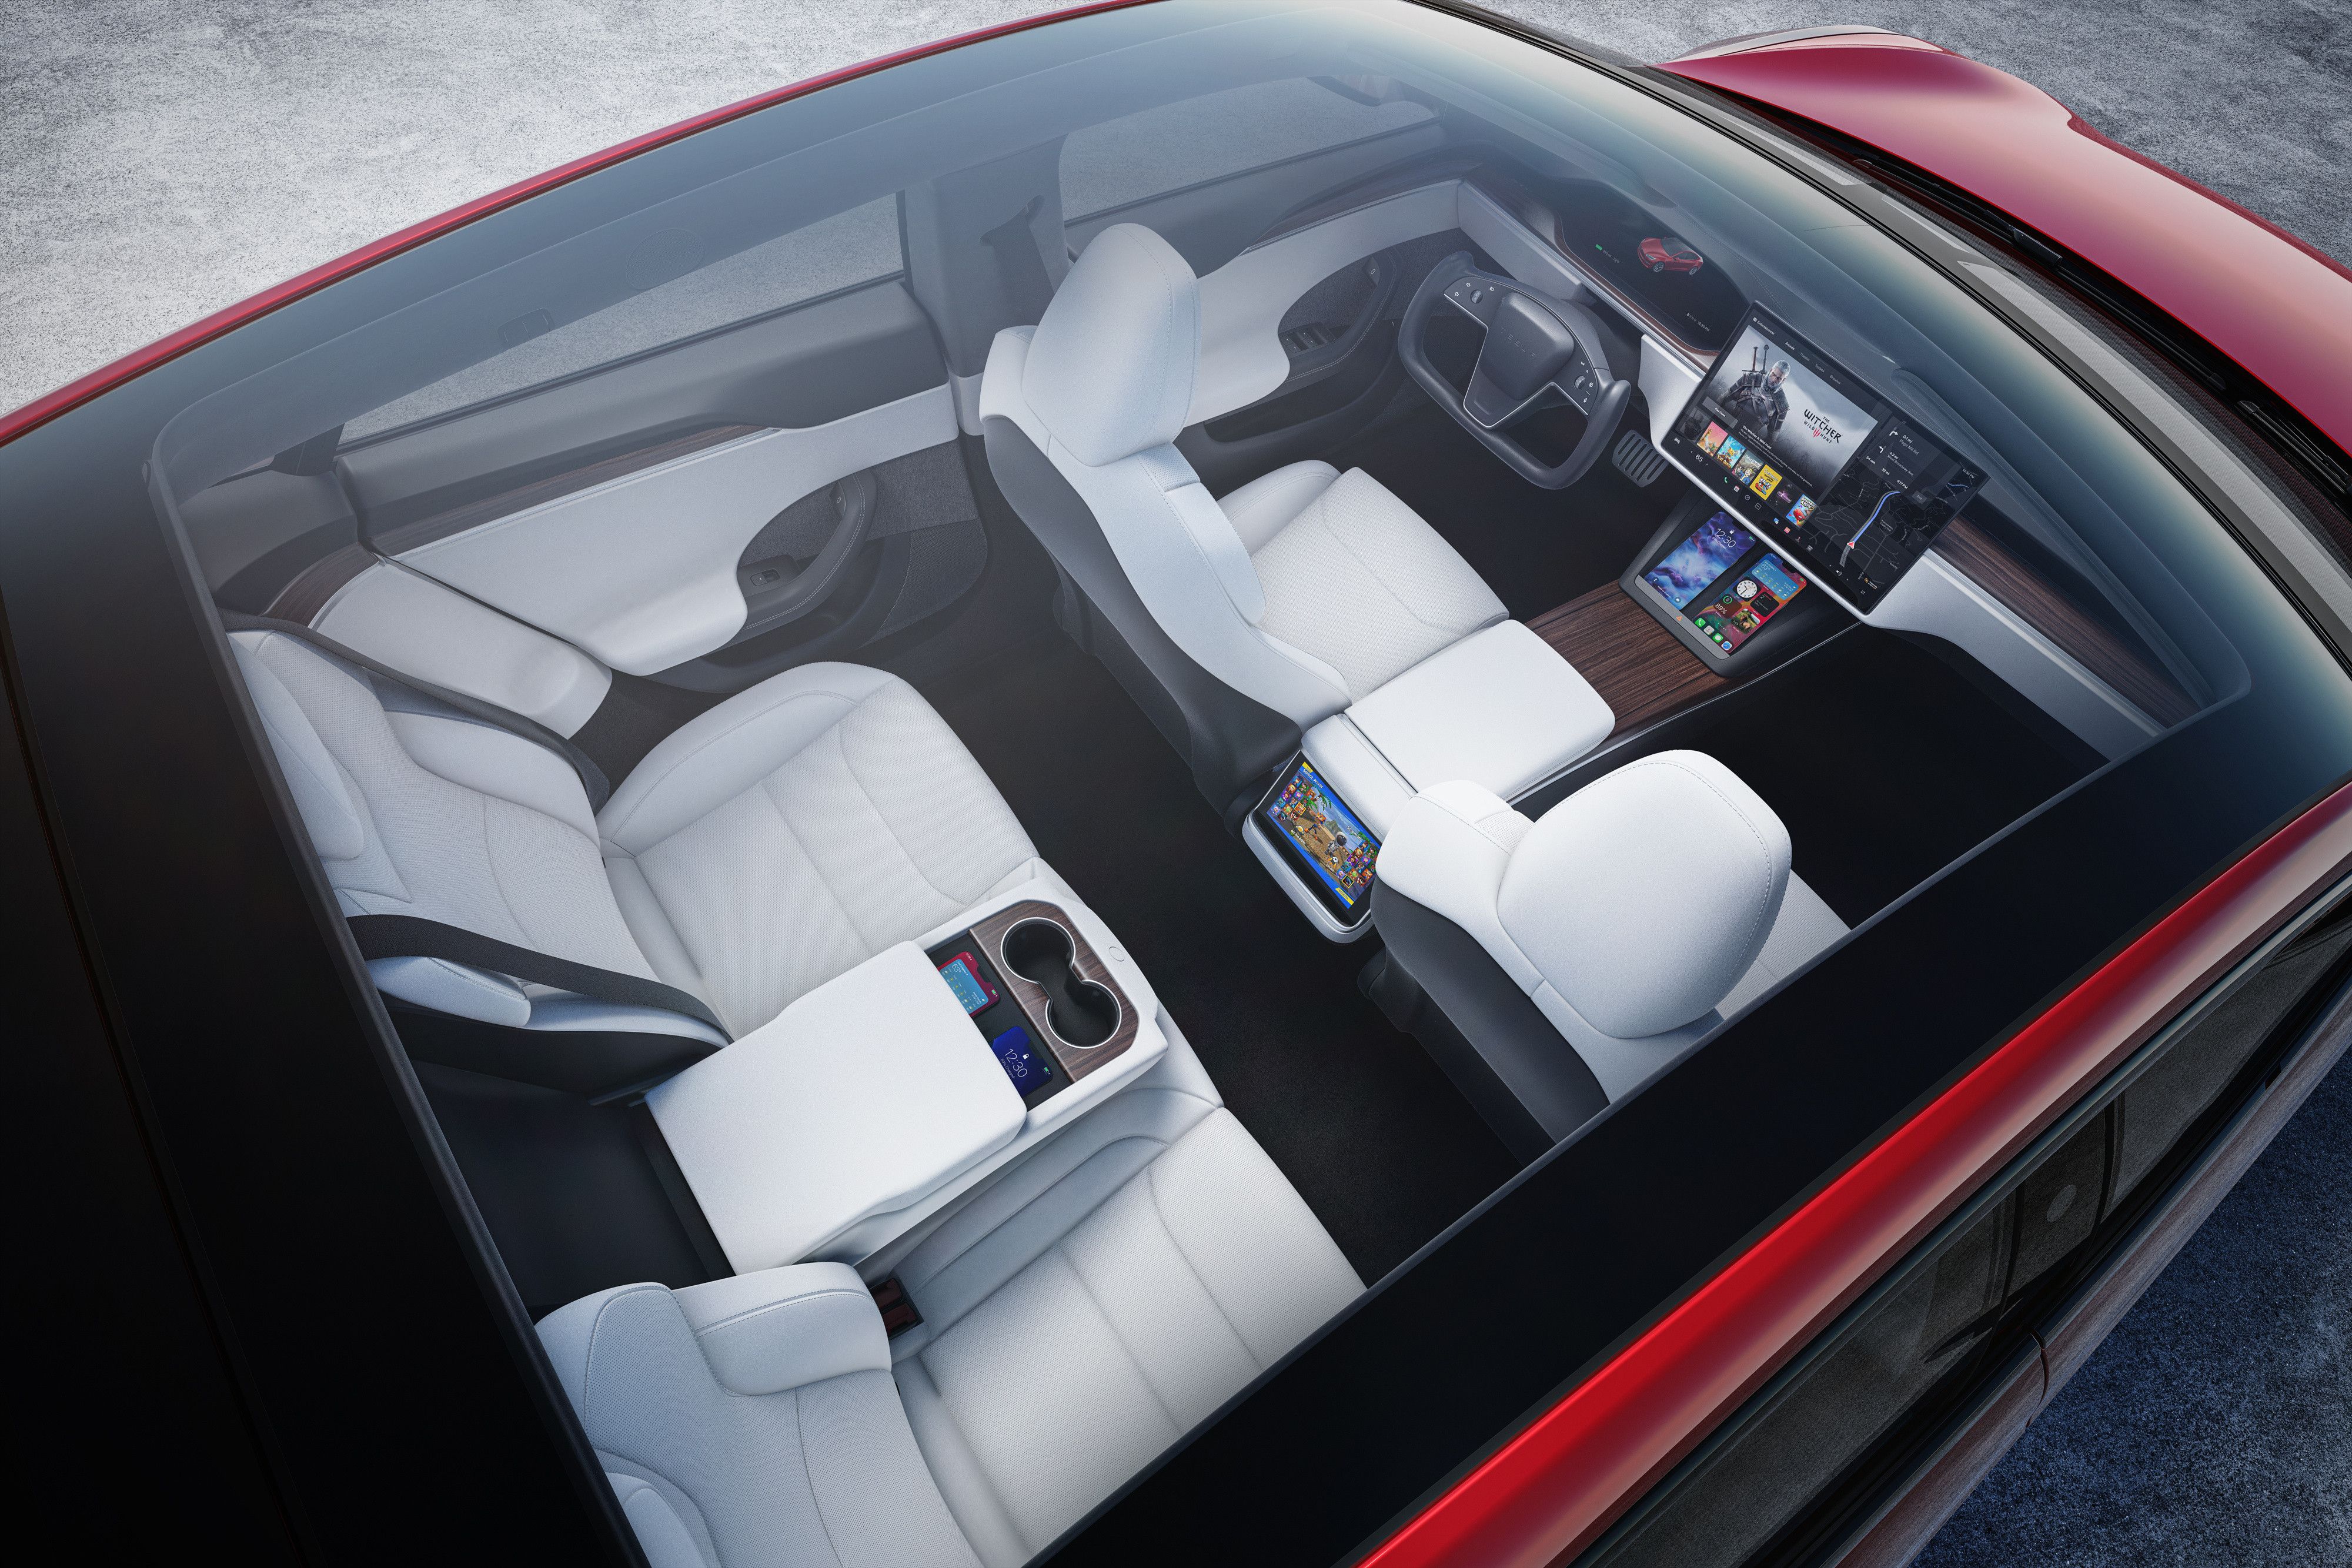 The Tesla Model S' interior on display. 